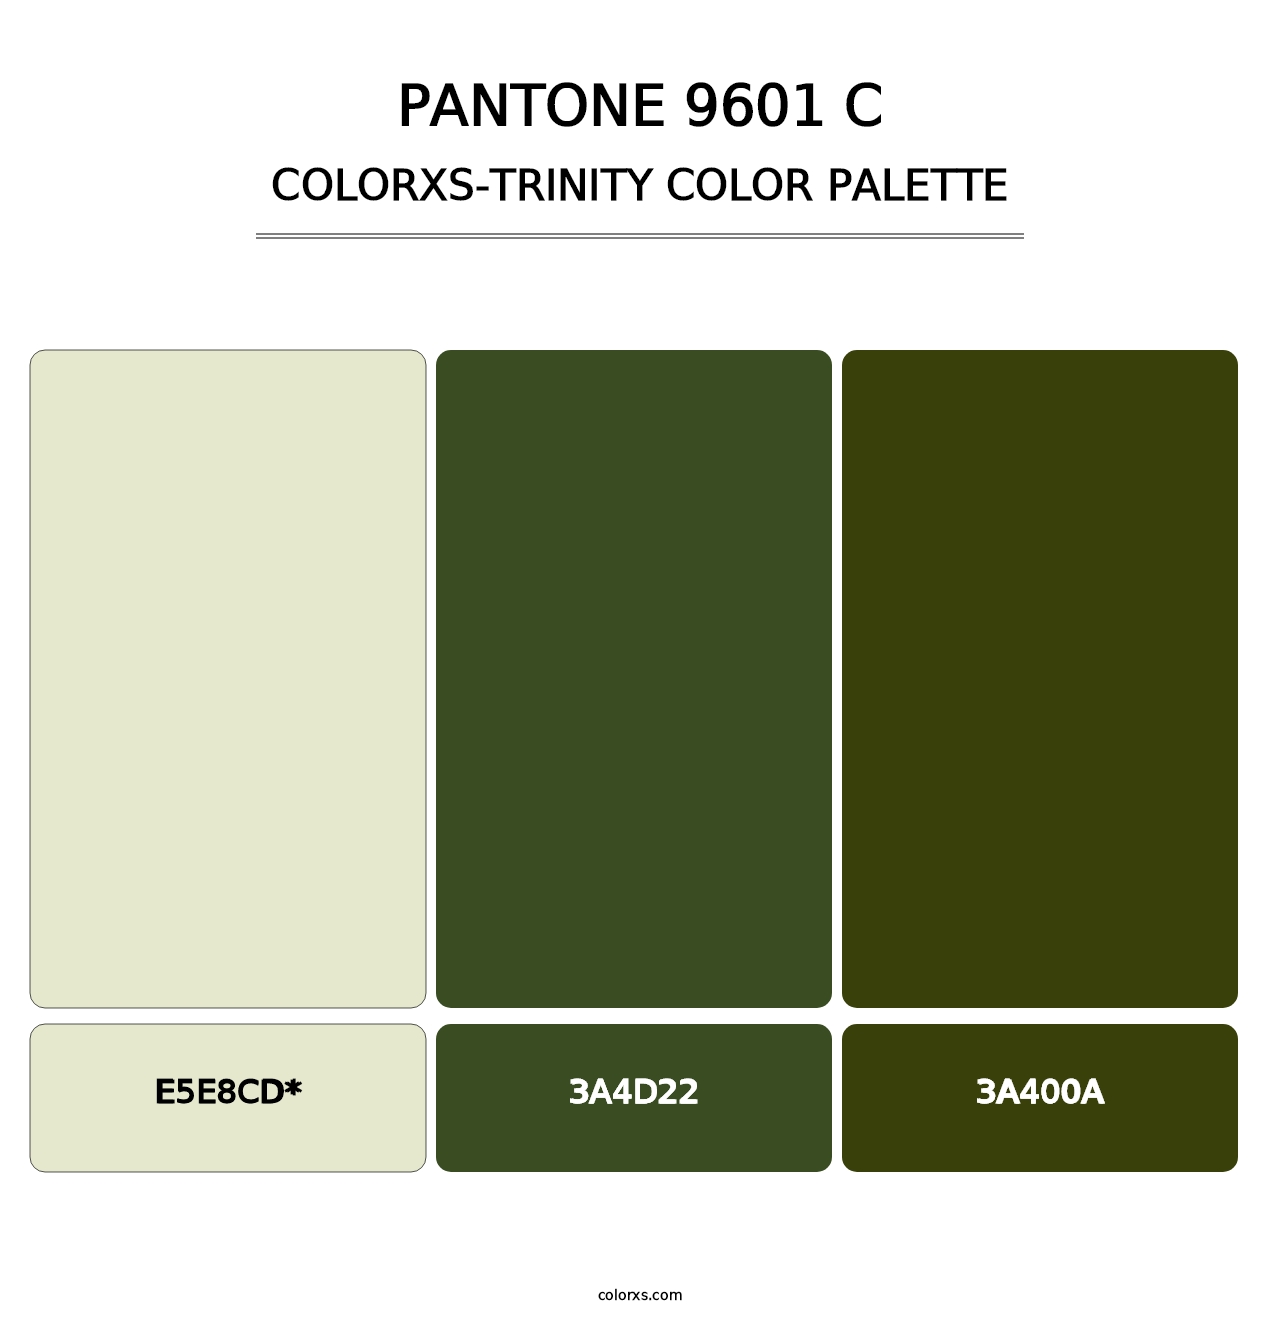 PANTONE 9601 C - Colorxs Trinity Palette